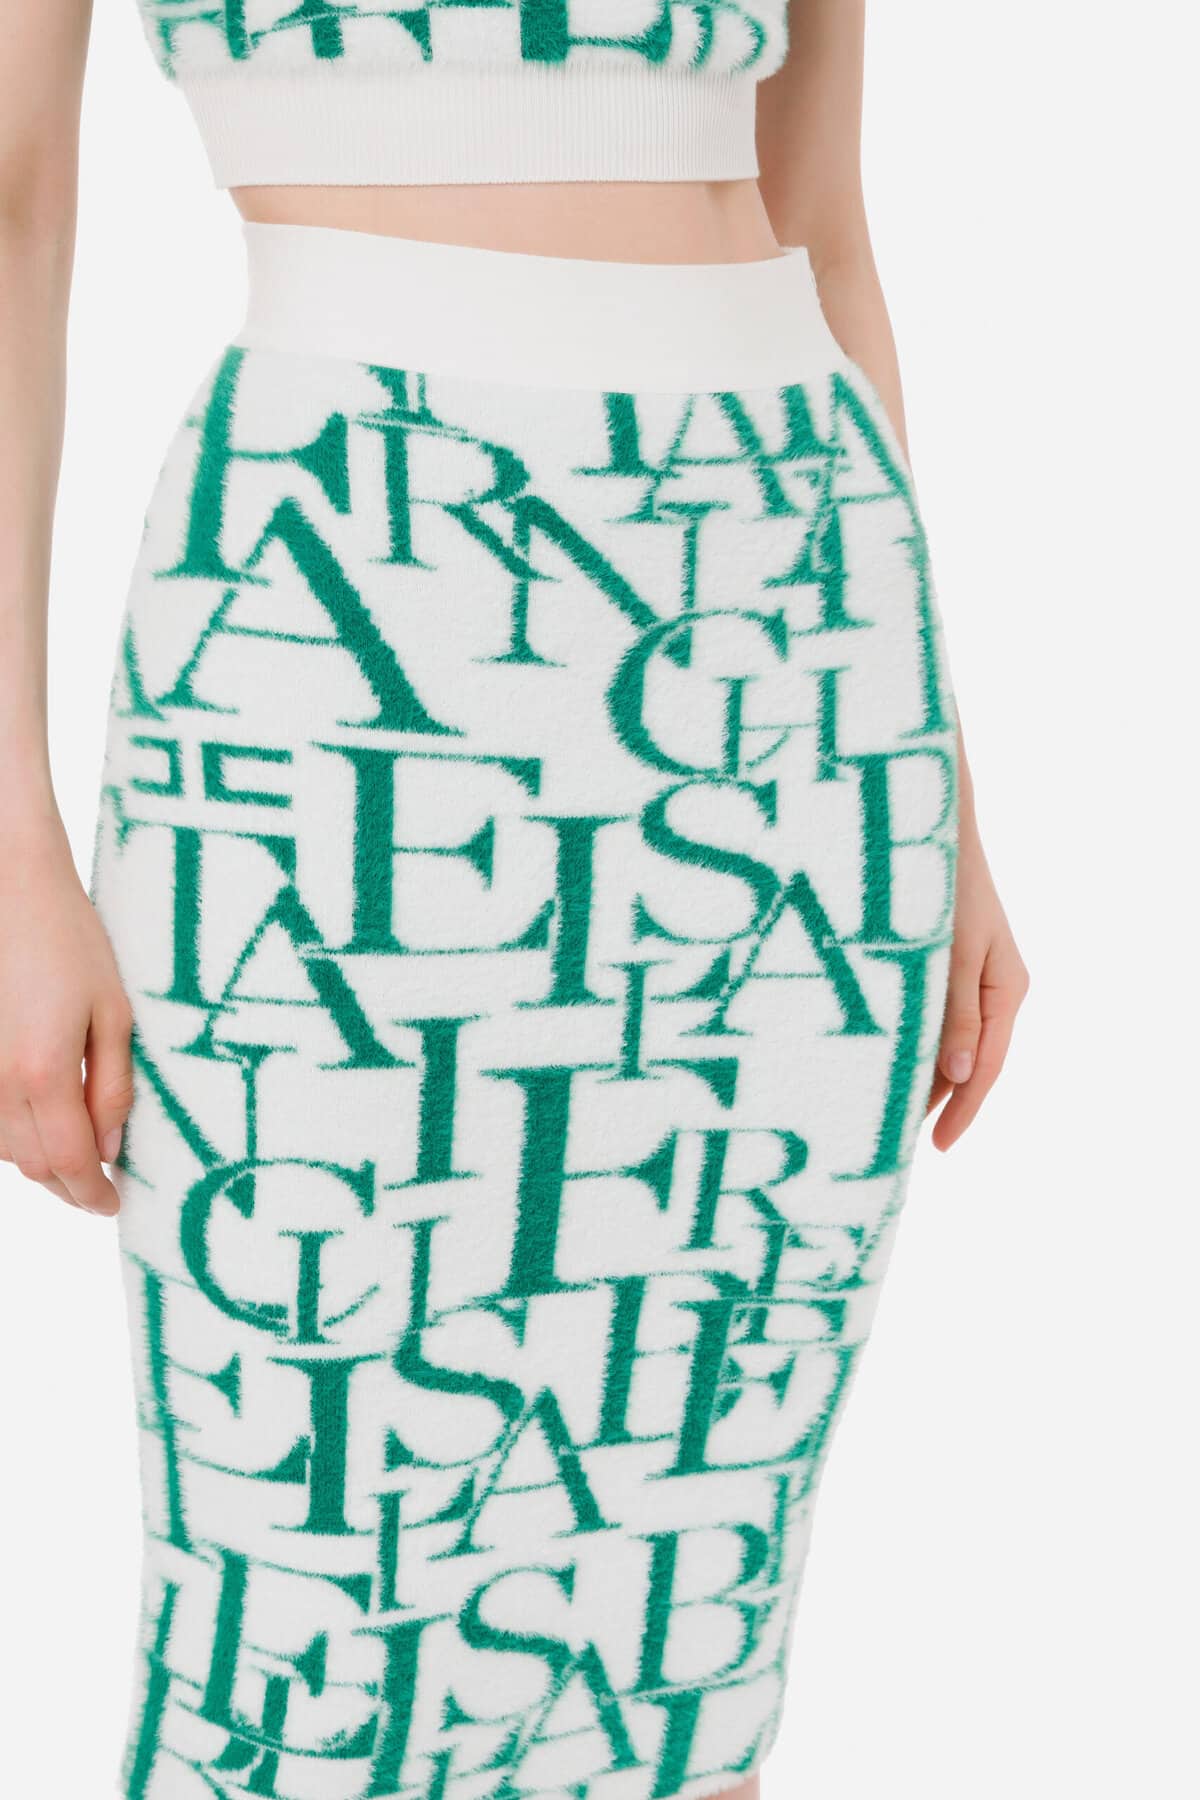 Pencil skirt with lettering pattern - ELEGANZA -ELISABETTA FRANCHI